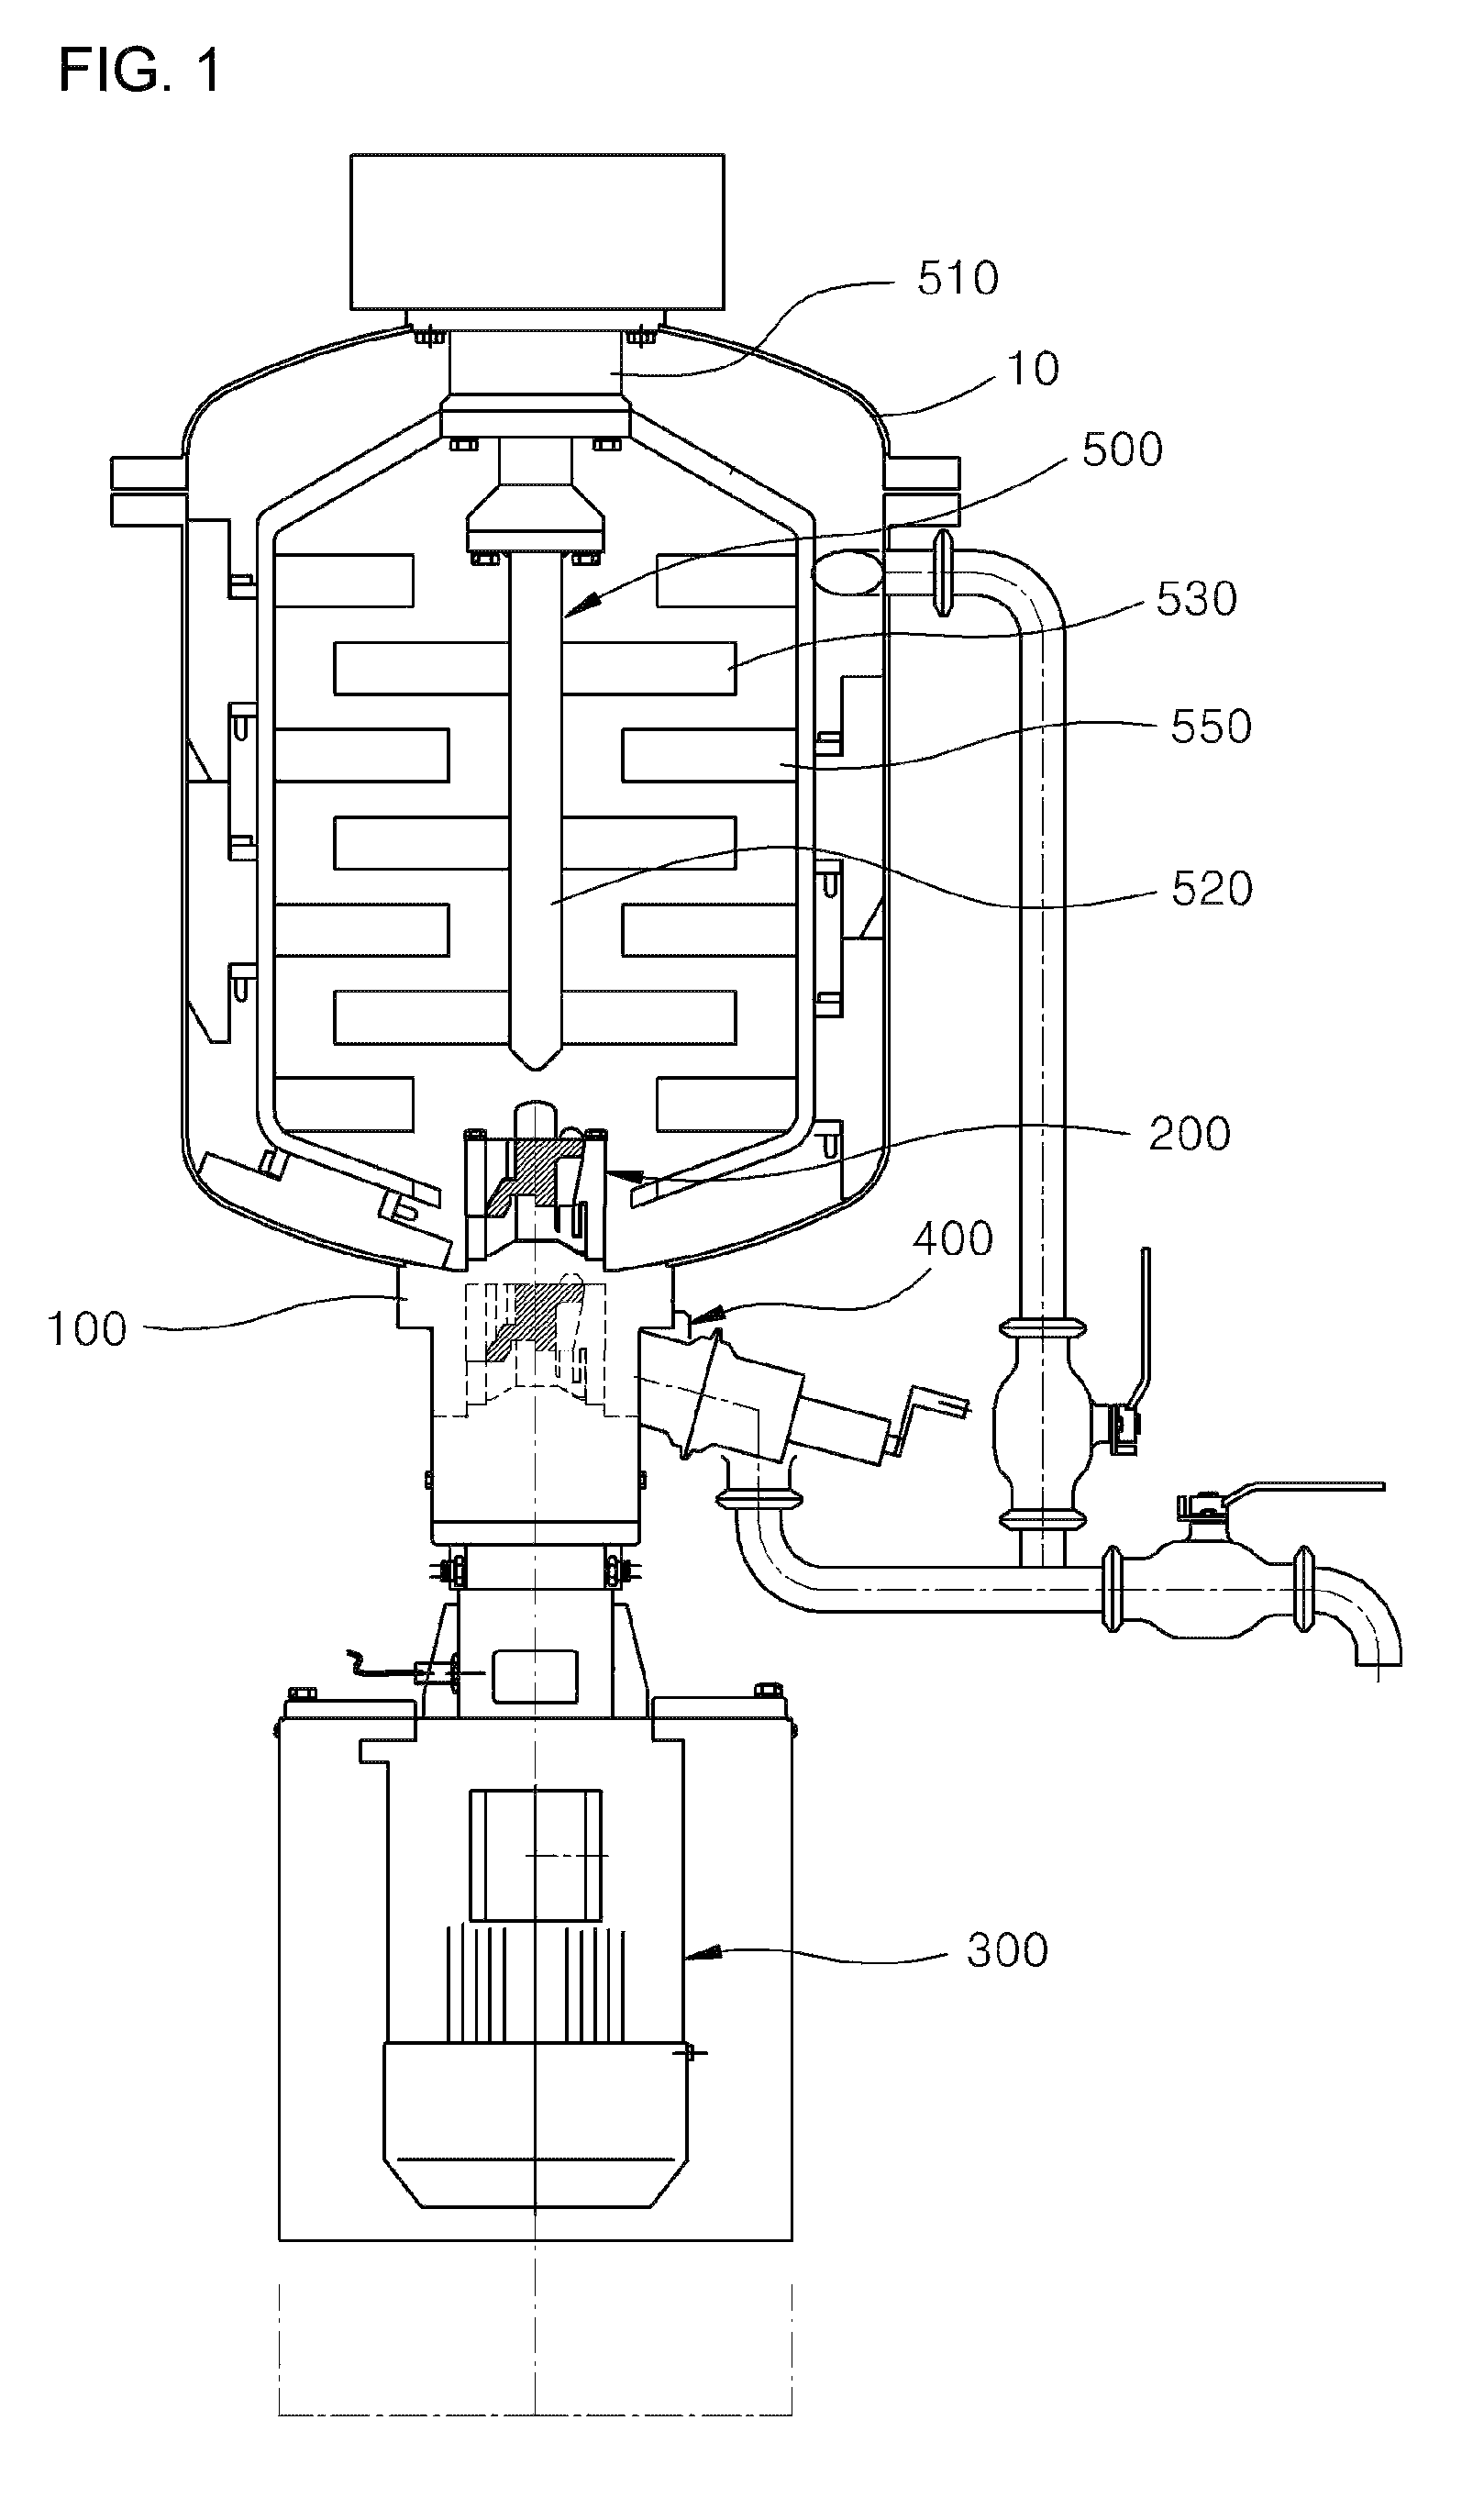 Homogenizing mixer with an agitating unit having a lifter unit